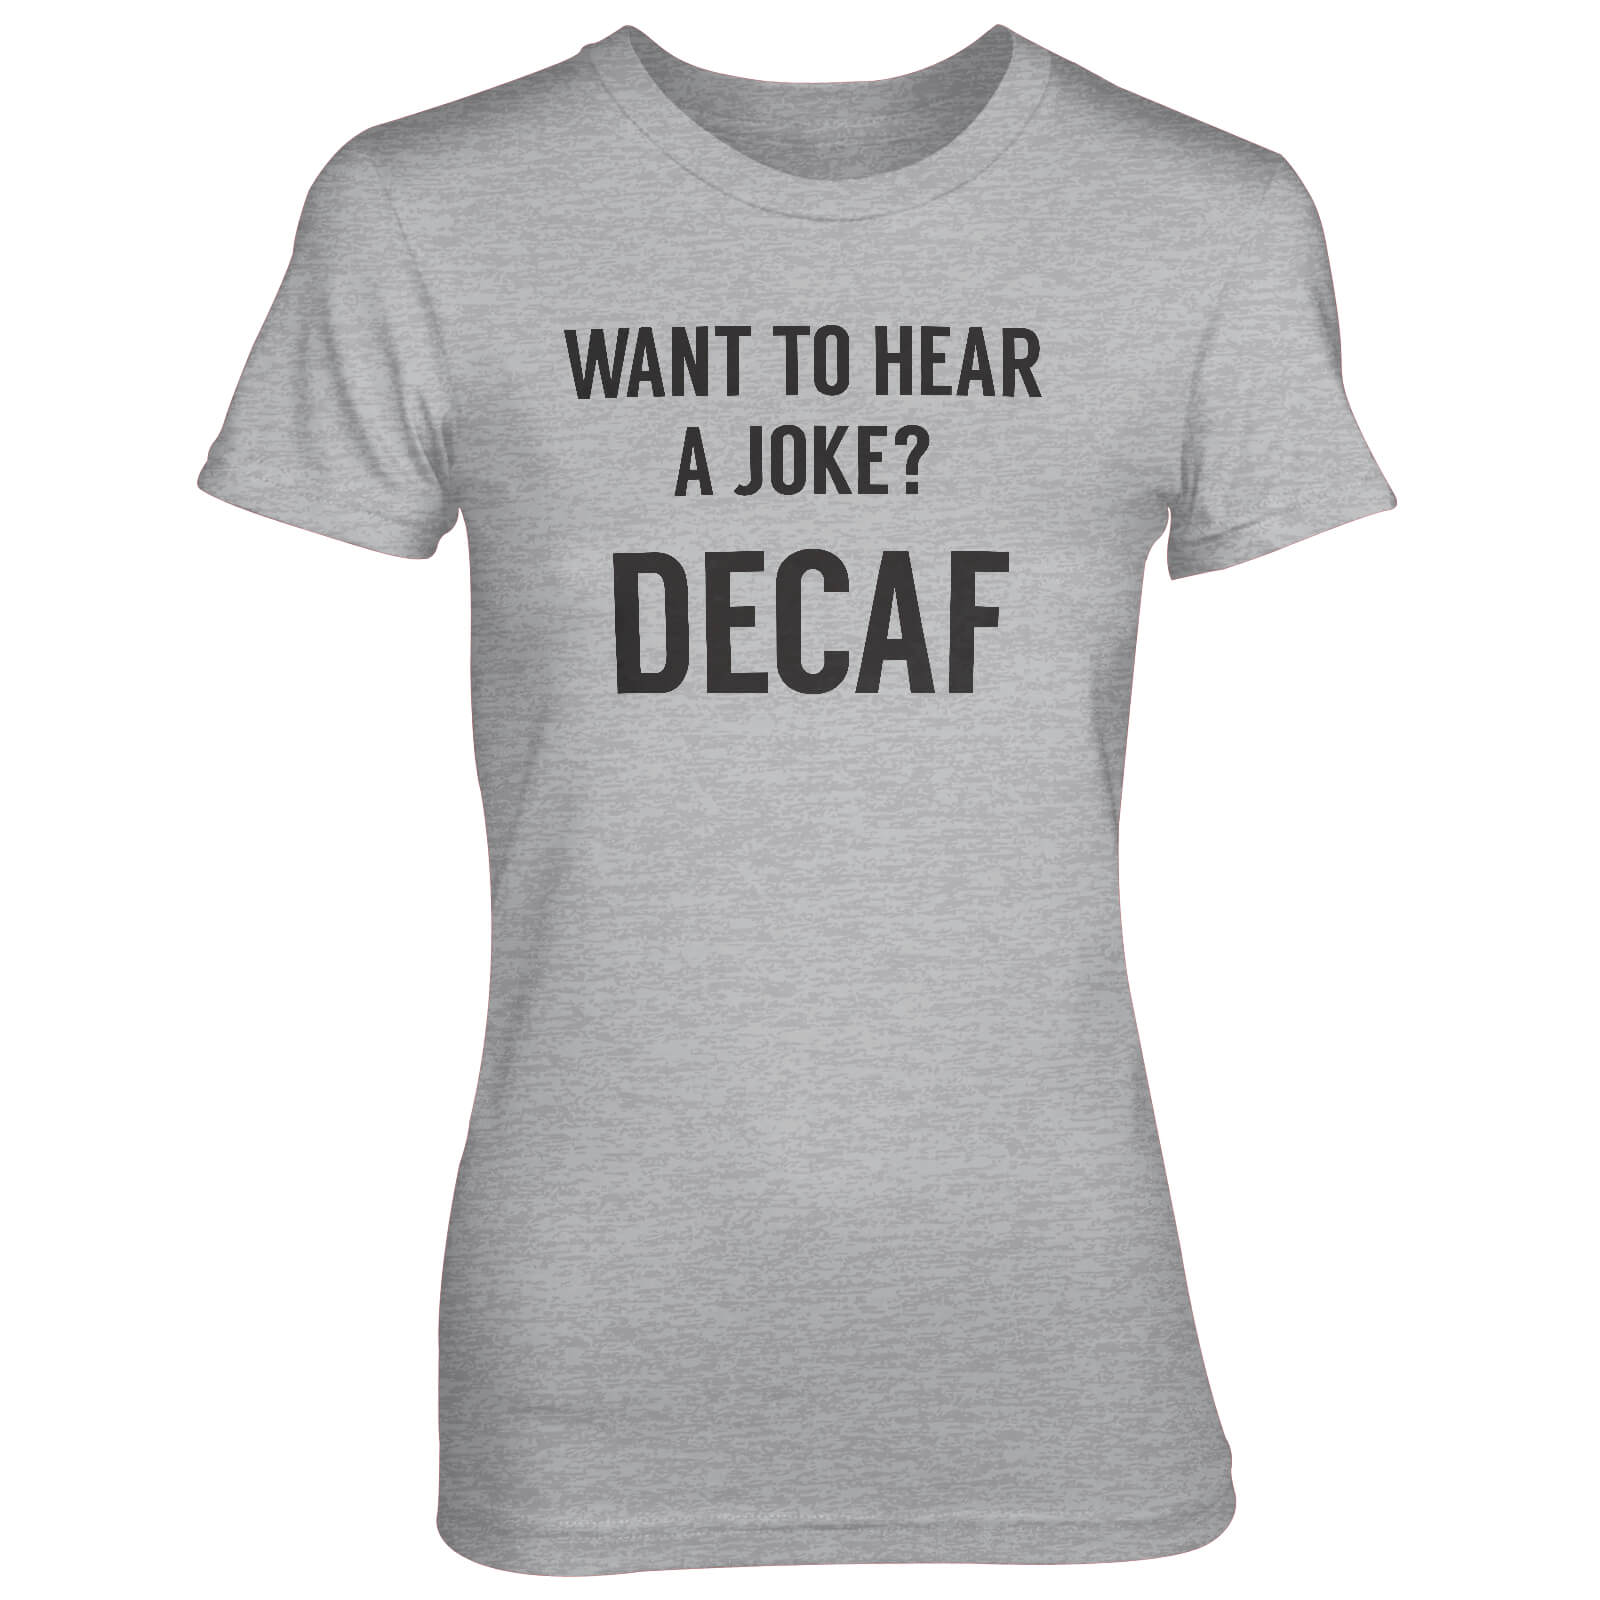 Want To Hear A Joke? DECAF Women's Grey T-Shirt - S - Grey